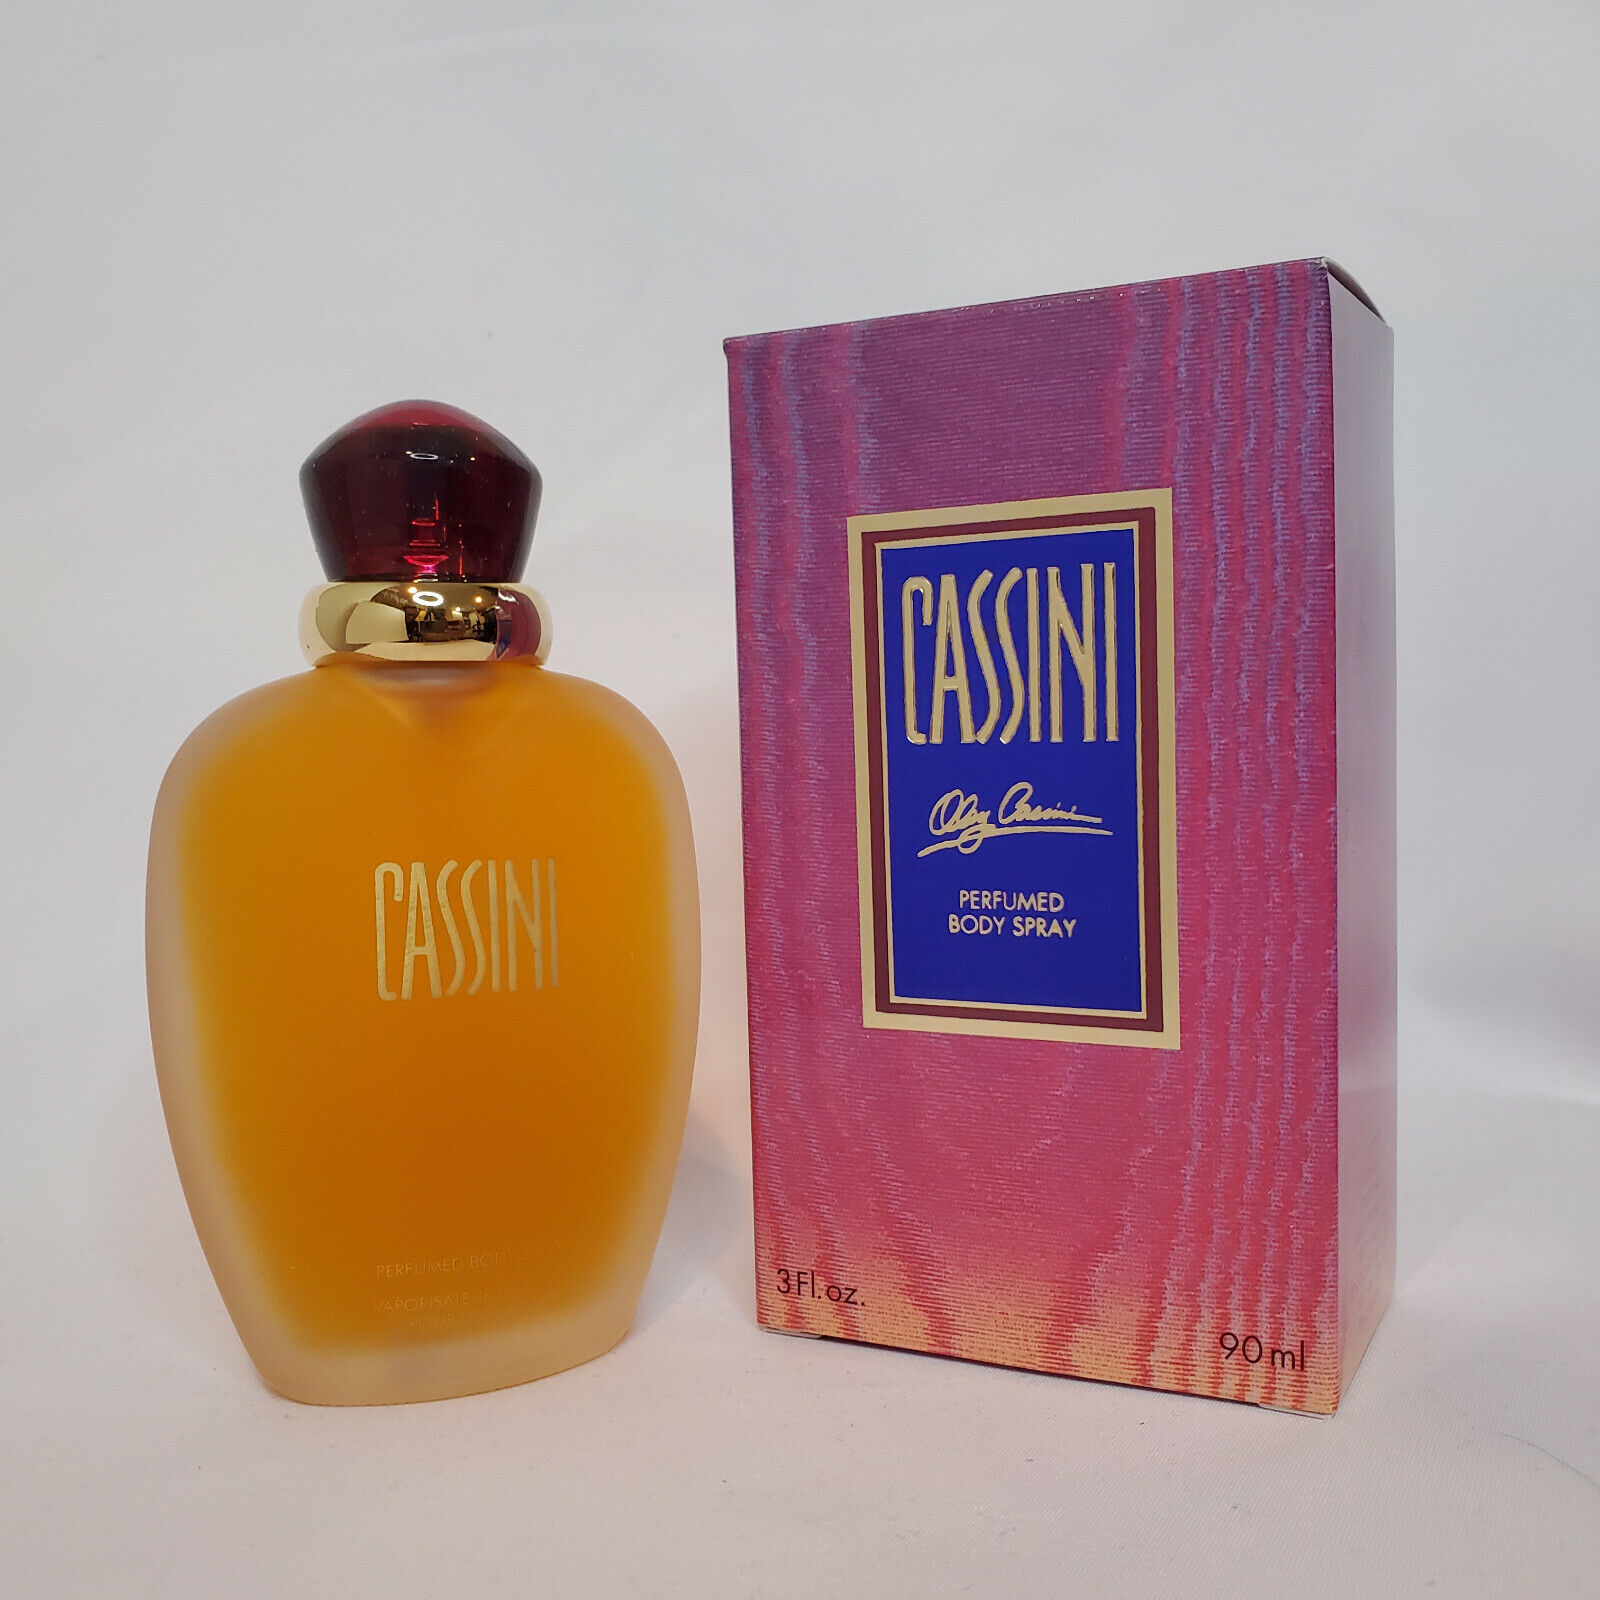 Cassini by Oleg Cassini 3 oz / 90 ml perfumed body spray - $98.74